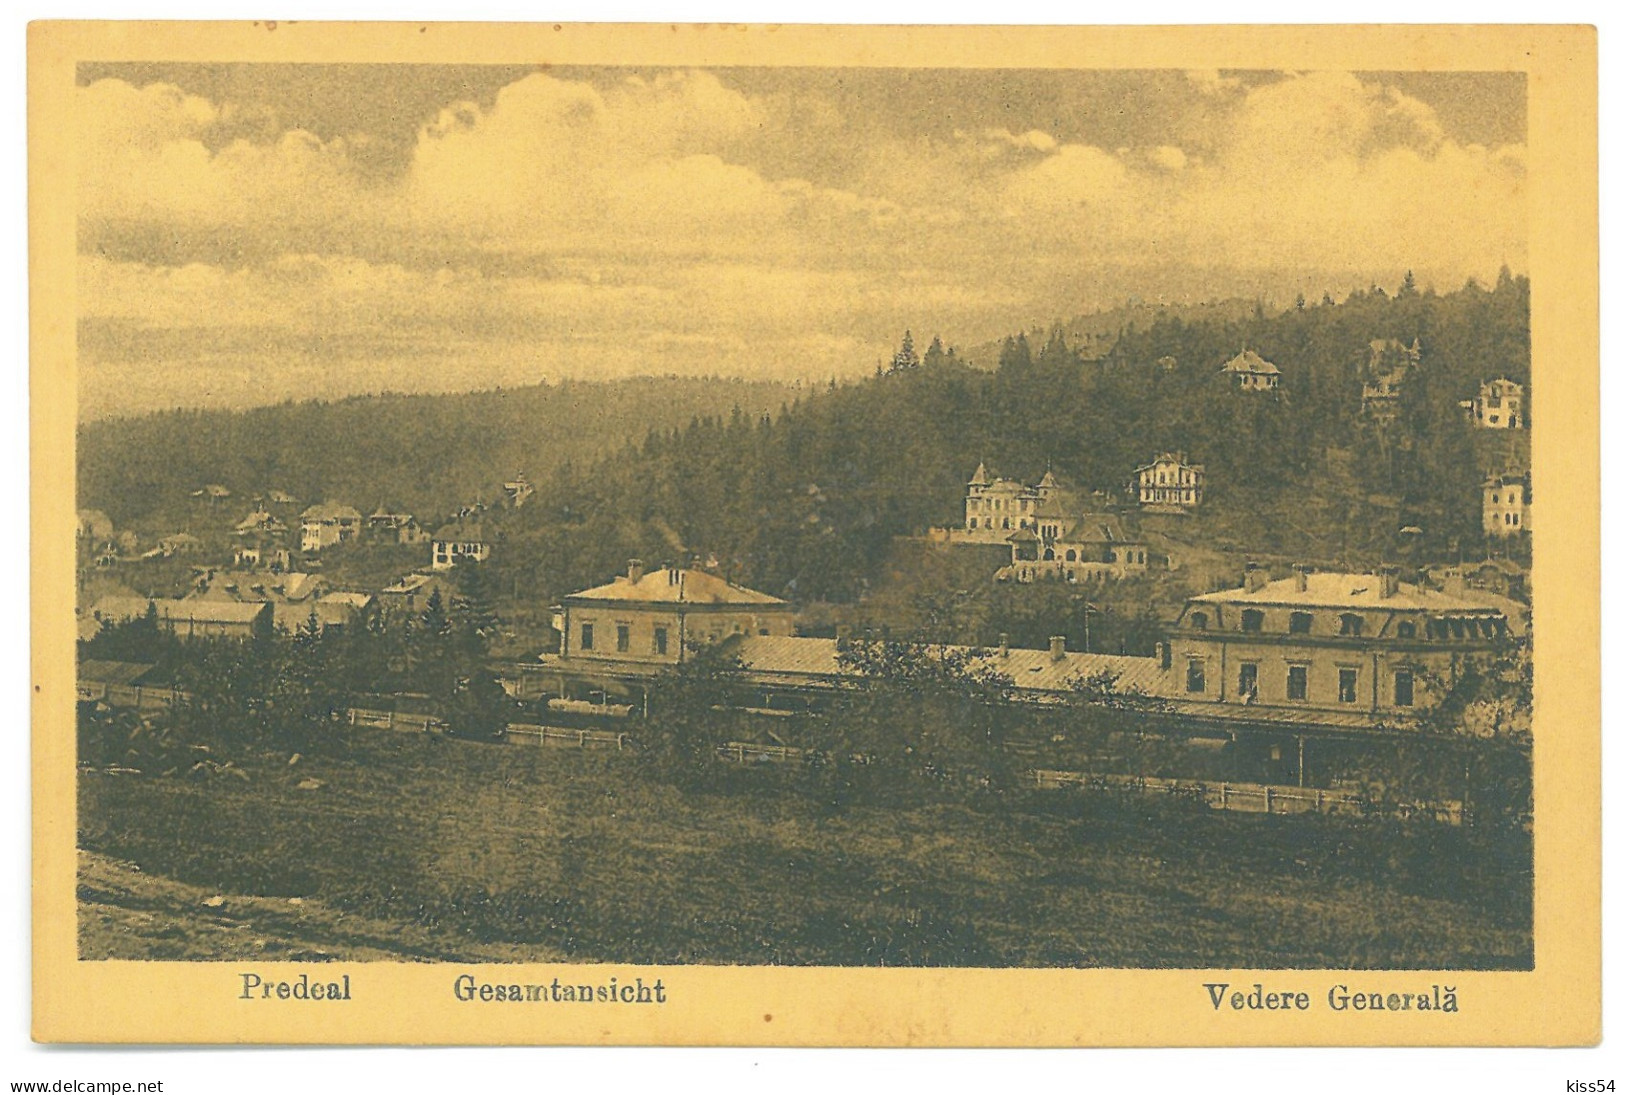 RO 82 - 25104 PREDEAL, Brasov, Railway Station, Romania - Old Postcard - Unused - Romania